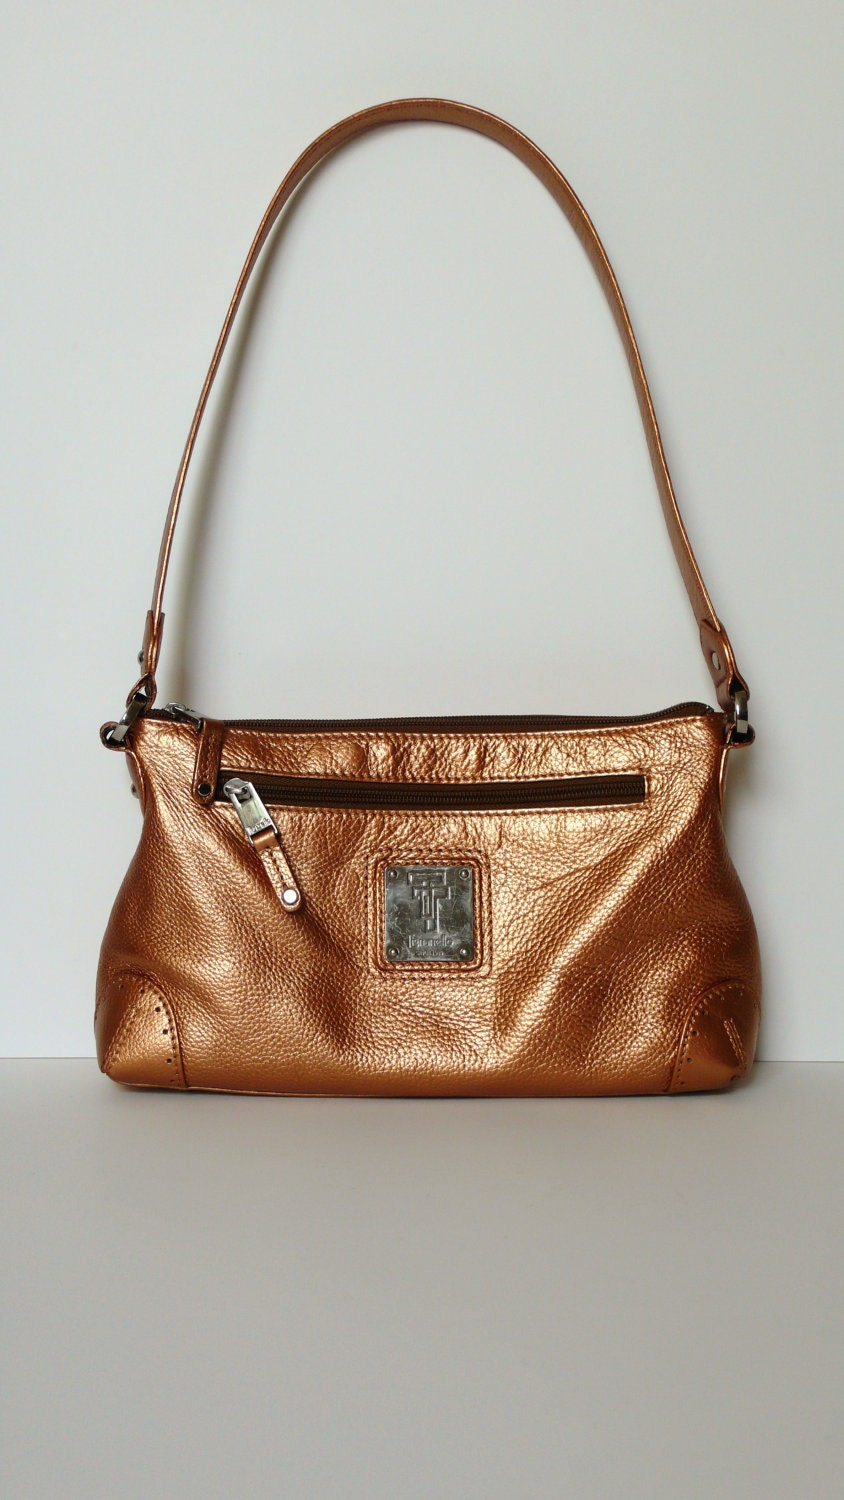 tignanello handbags on sale